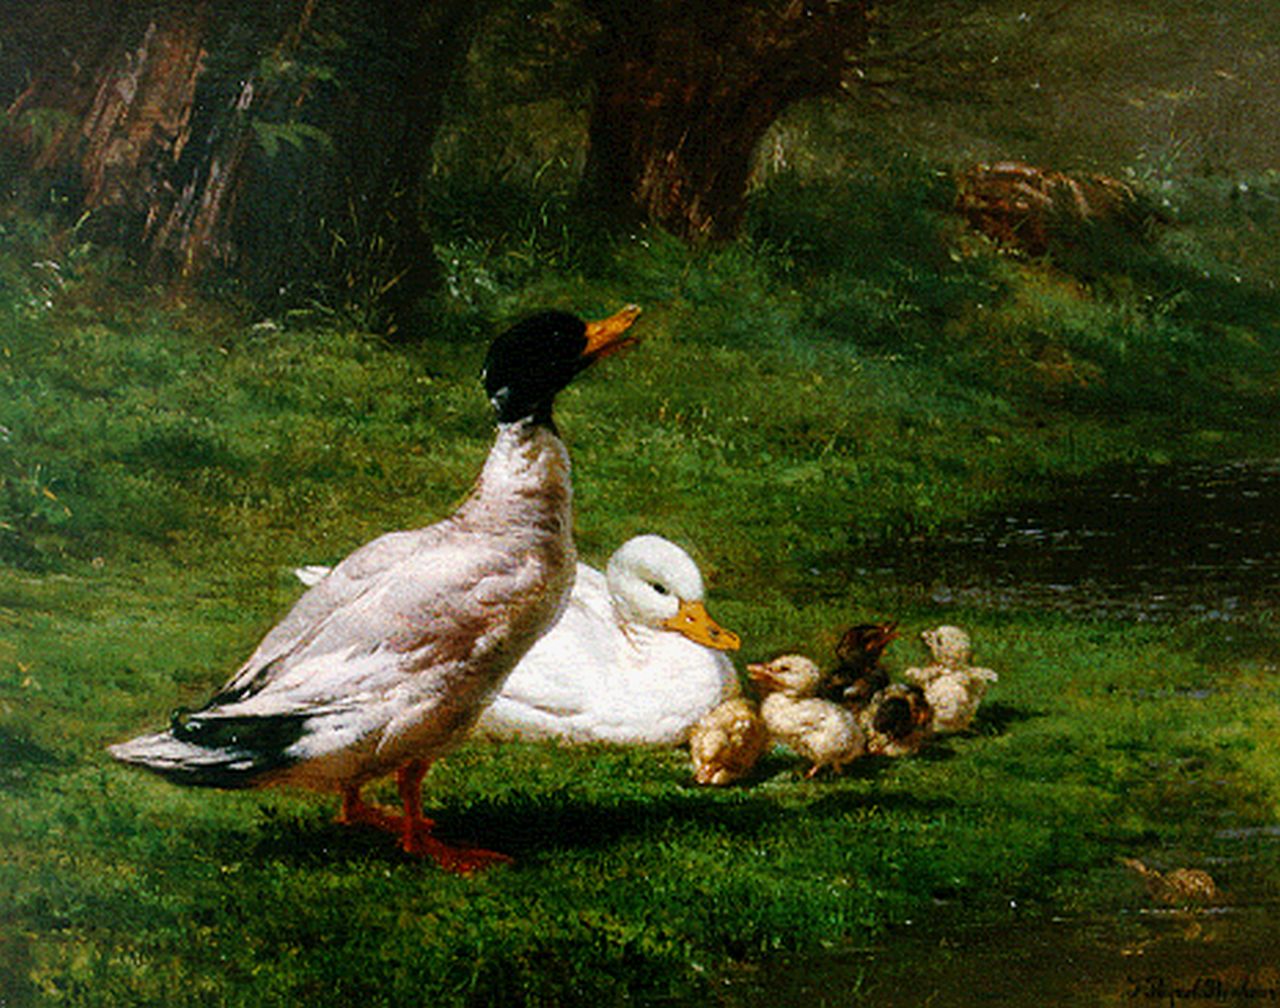 Peyrol-Bonheur J.  | Juliette Peyrol-Bonheur, A duck family, Öl auf Leinwand 32,5 x 40,7 cm, signed l.r. und dated 1859